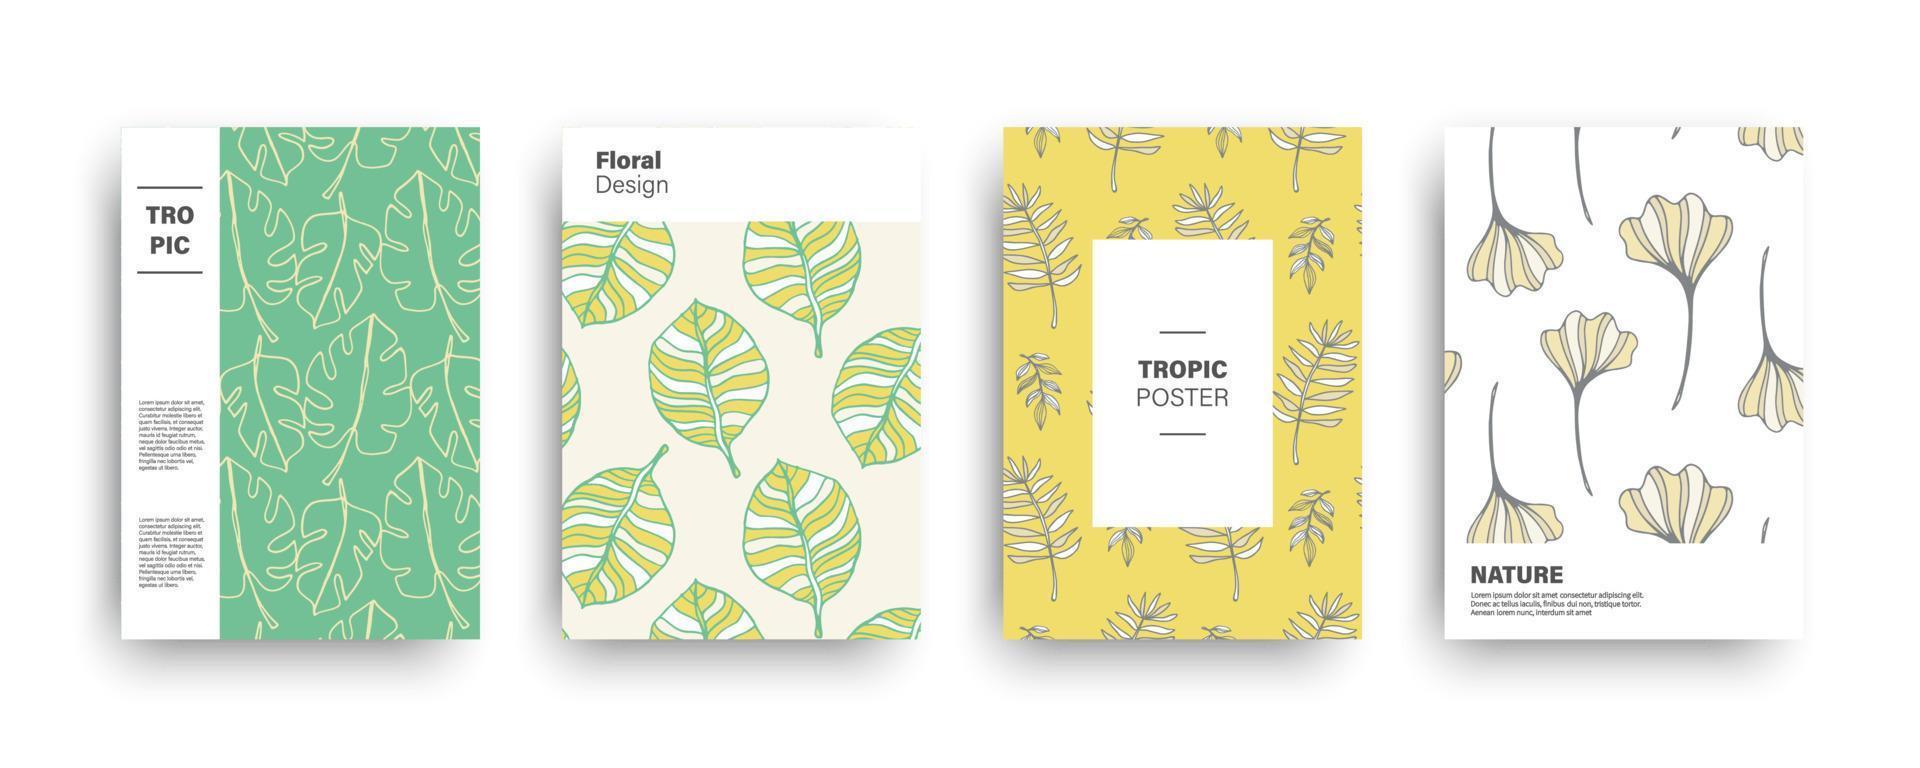 Tropic nature exotic covers set. Hand drawn hawaiian plants vector